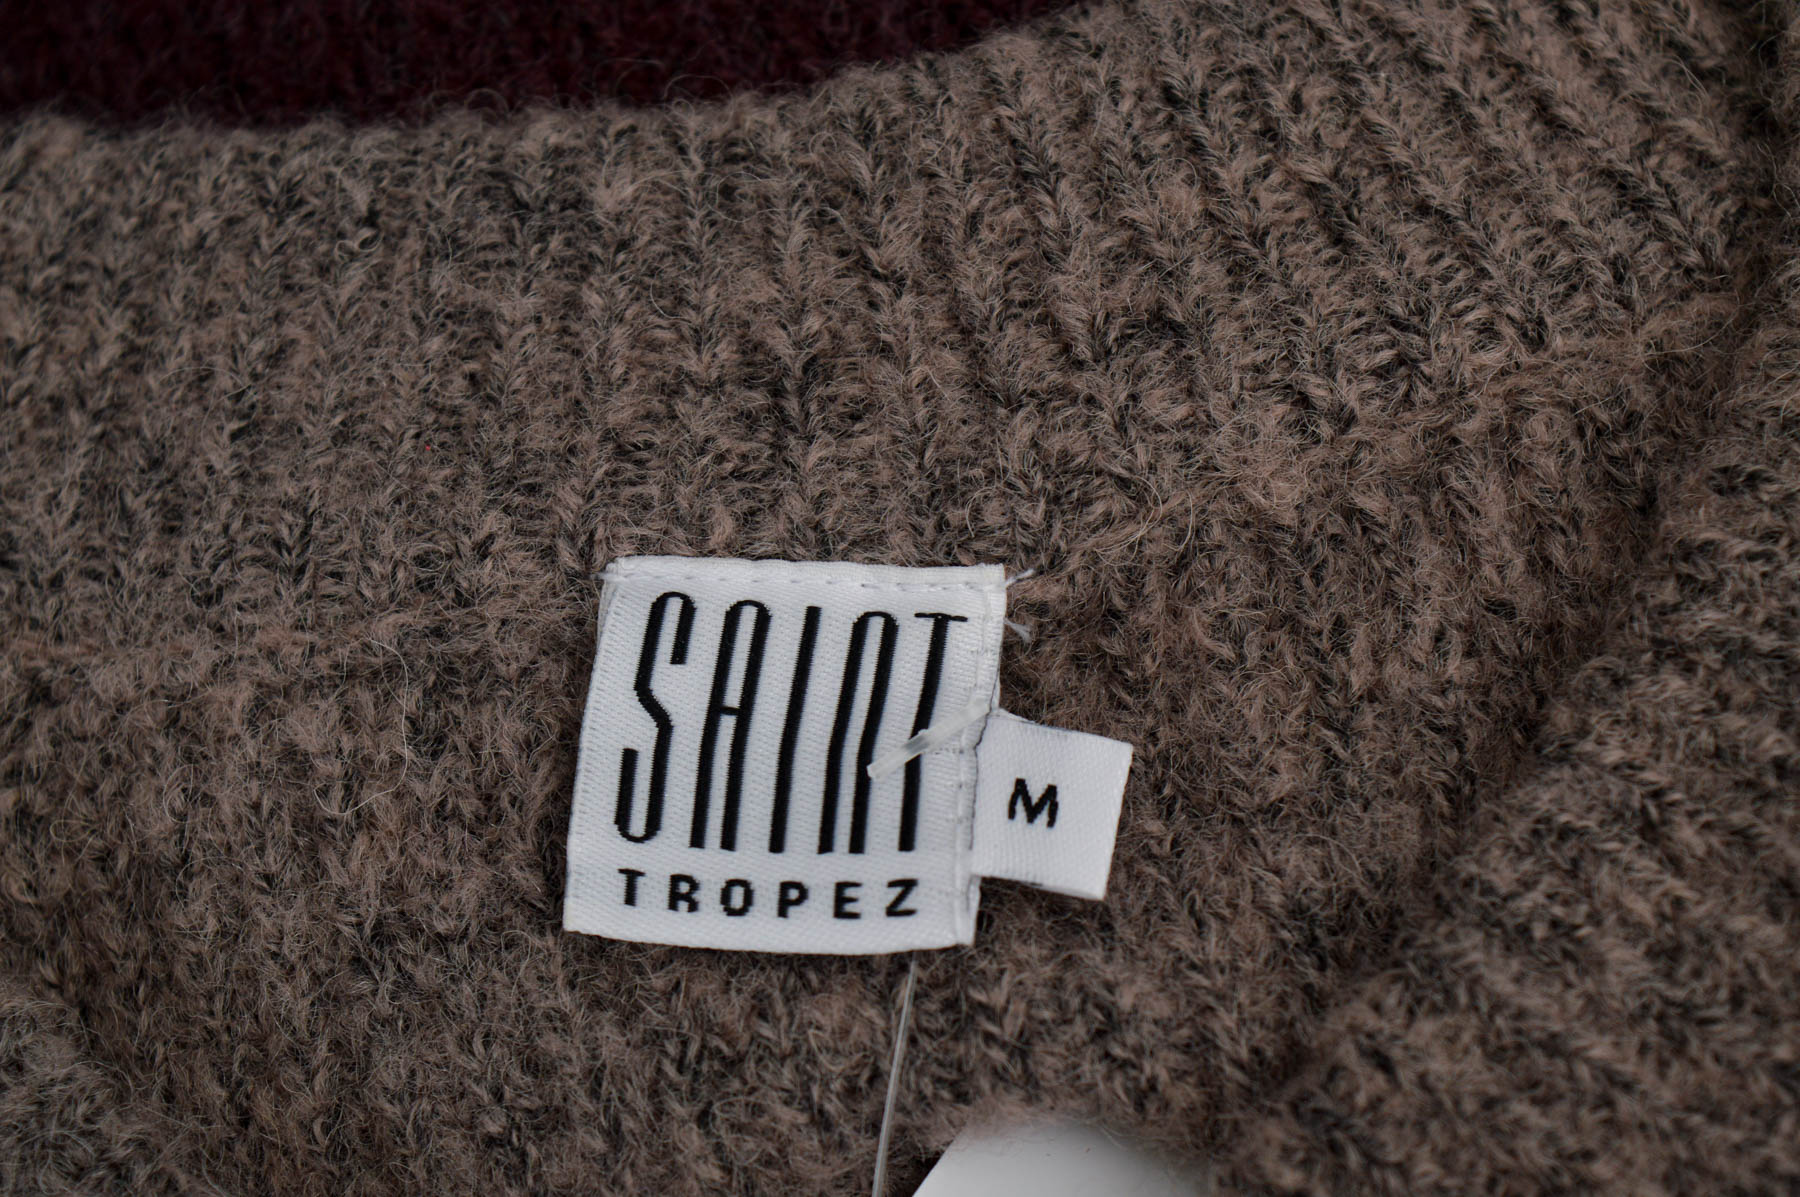 Women's sweater - Saint Tropez - 2